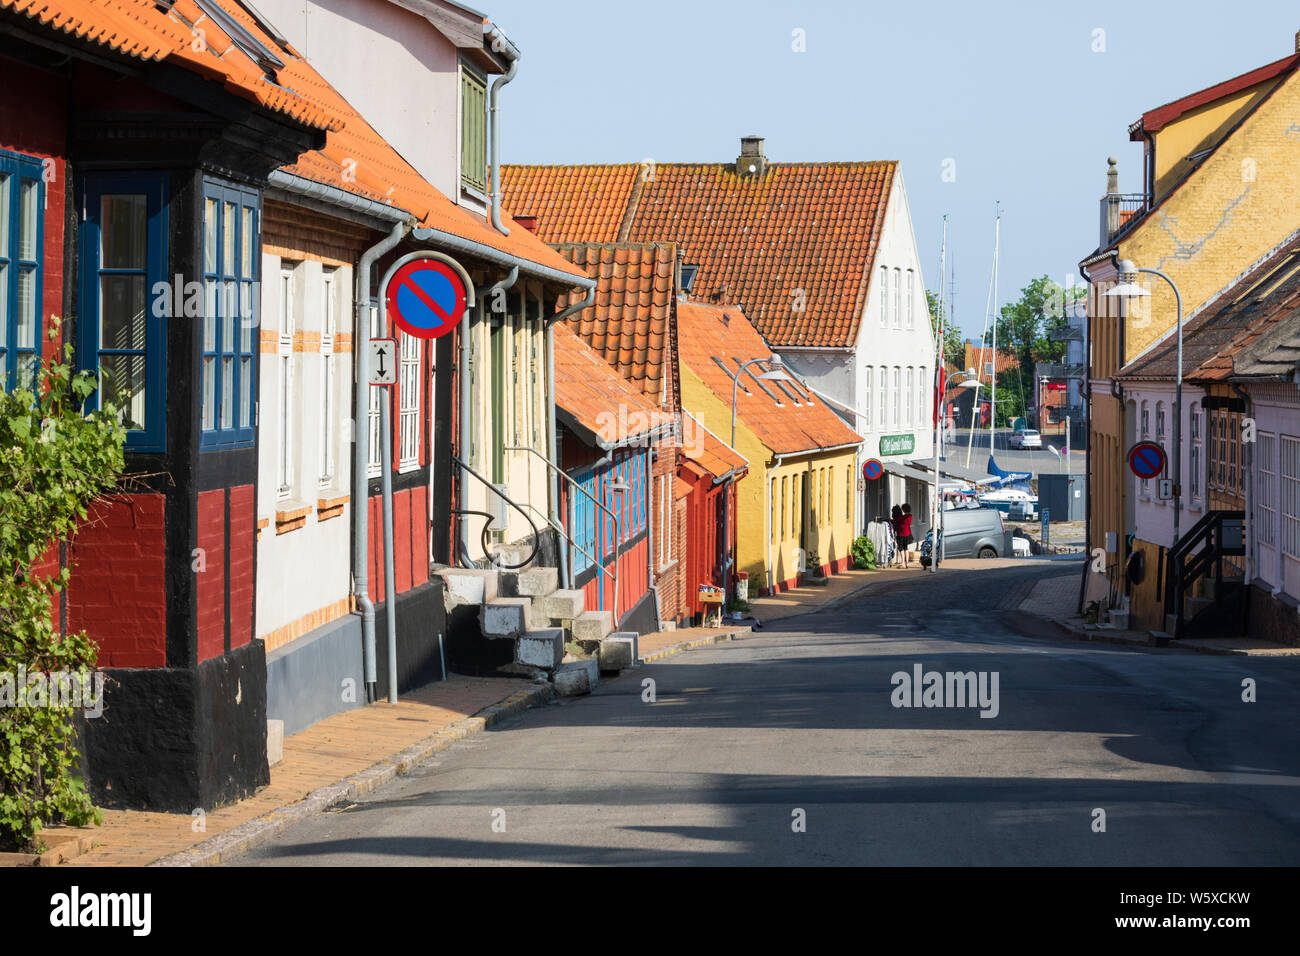 Alten traditionellen Holzhäusern entlang der Straße in der Altstadt, Allinge, Bornholm, Insel, Ostsee, Dänemark, Europa Stockfoto